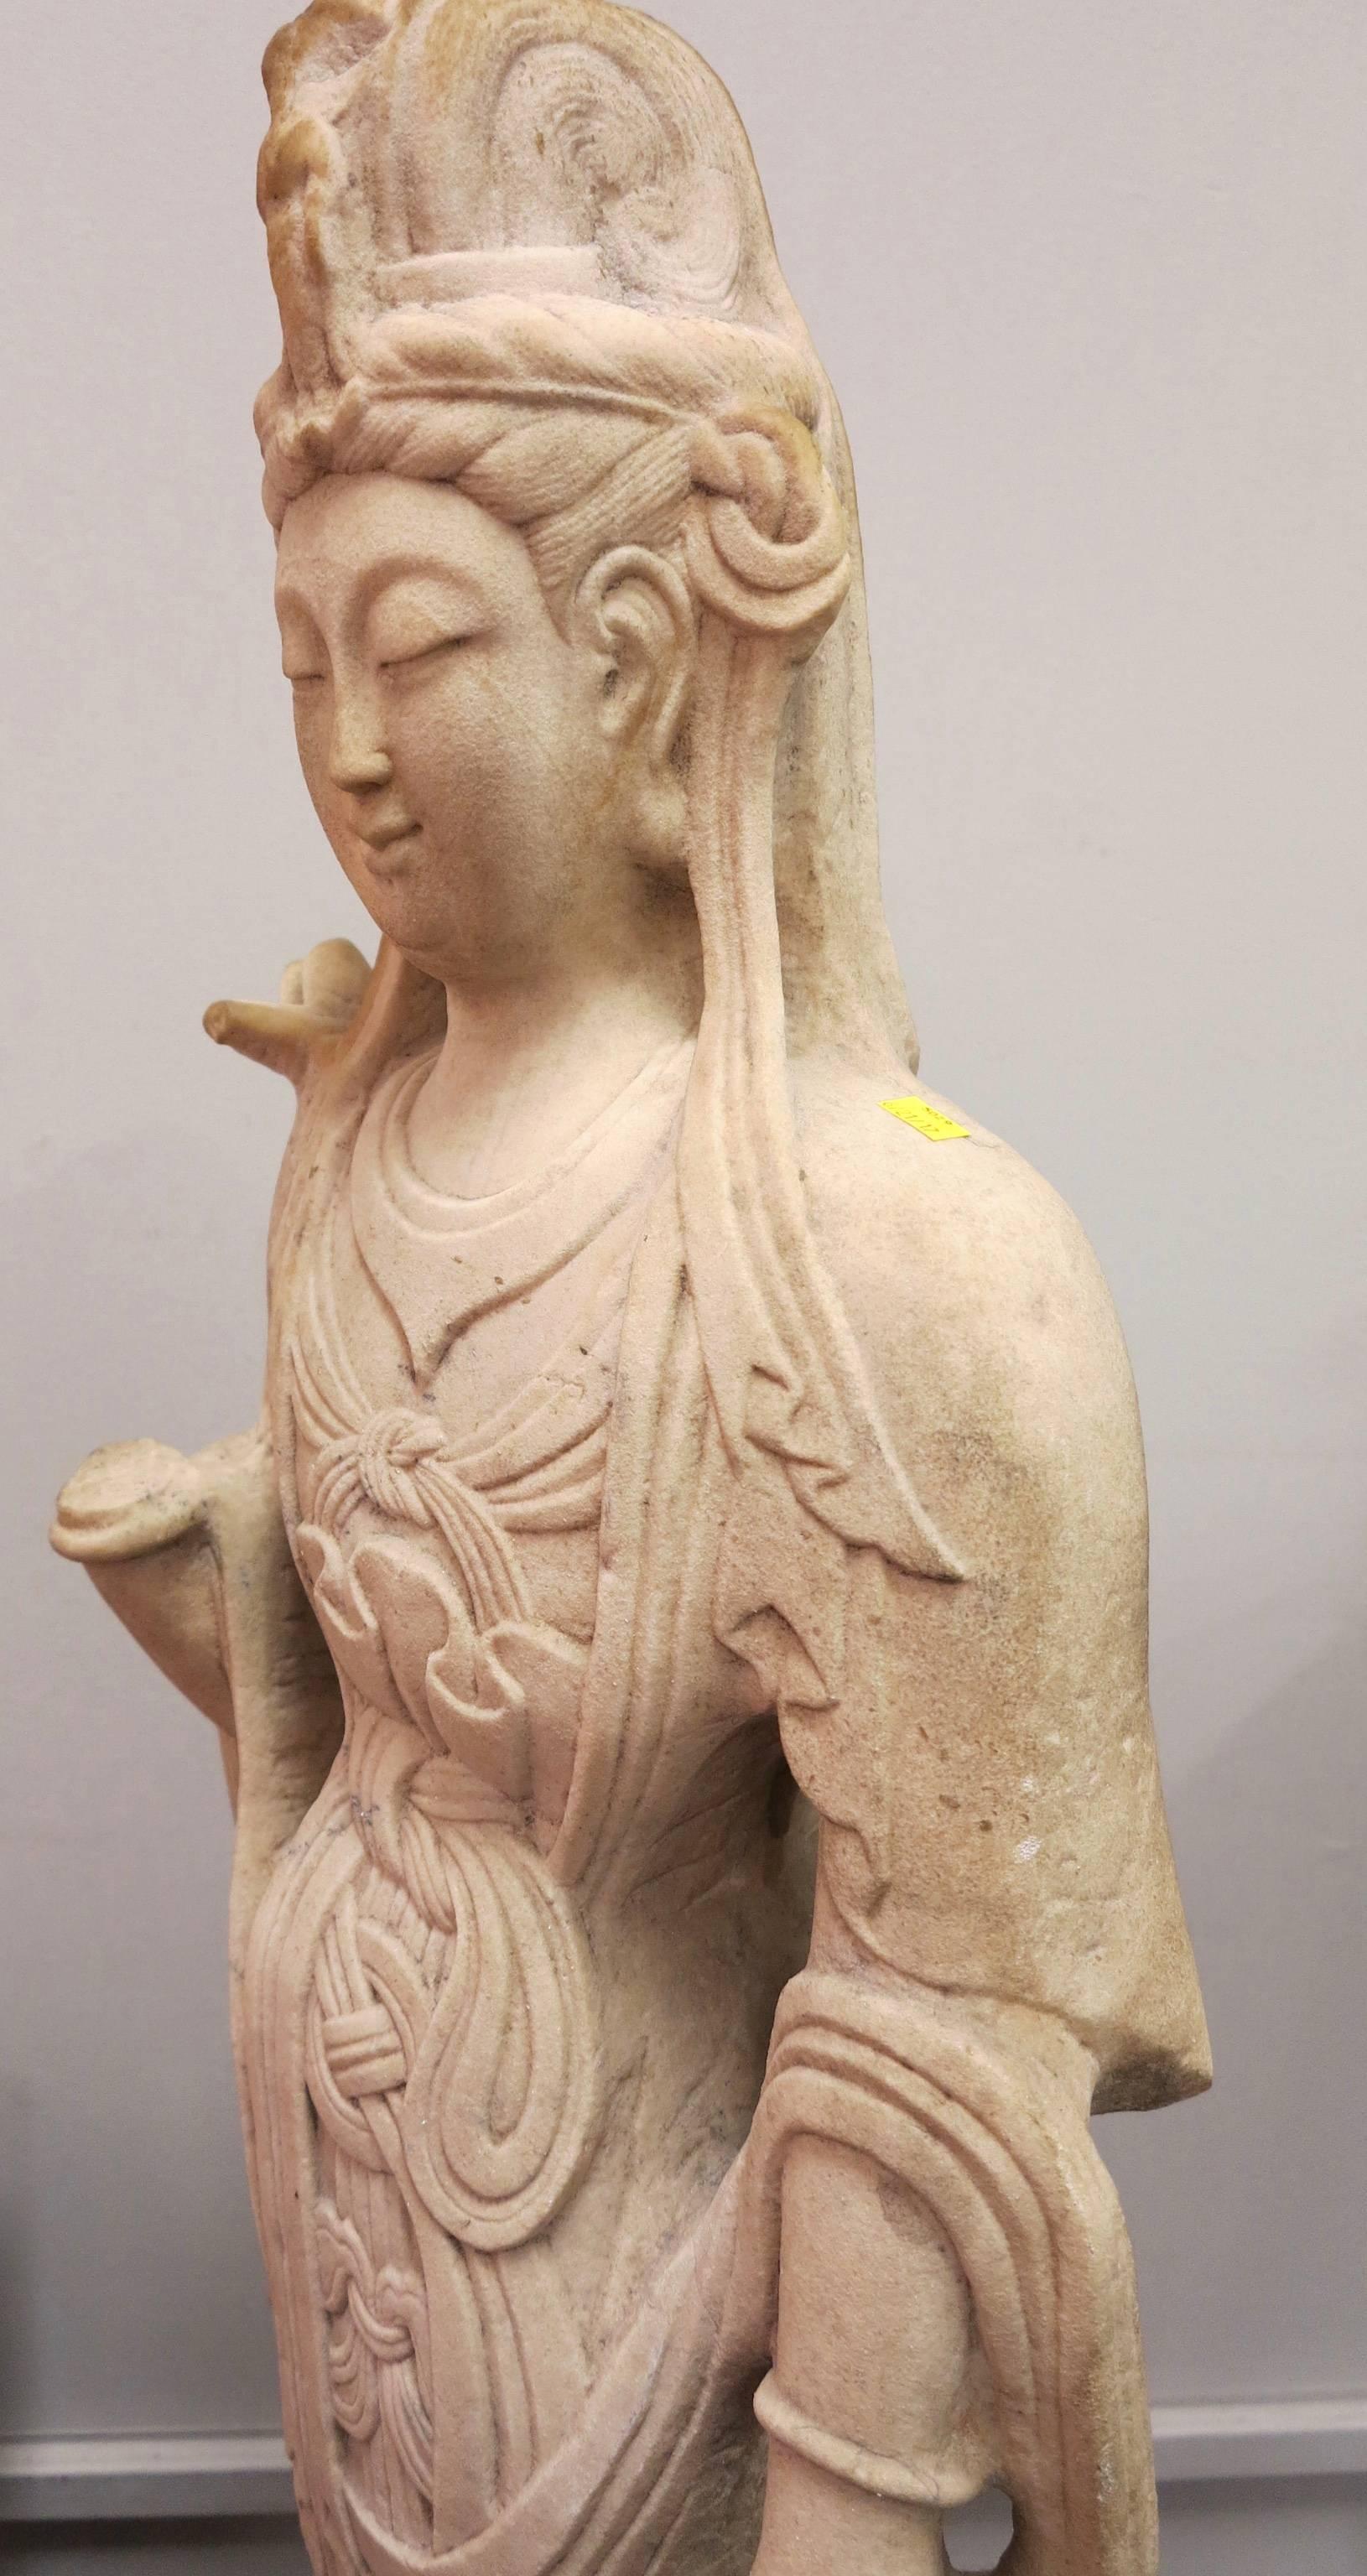 Antique standing Guan Yin Bodhisattva marble sculpture - Realist Sculpture by Unknown